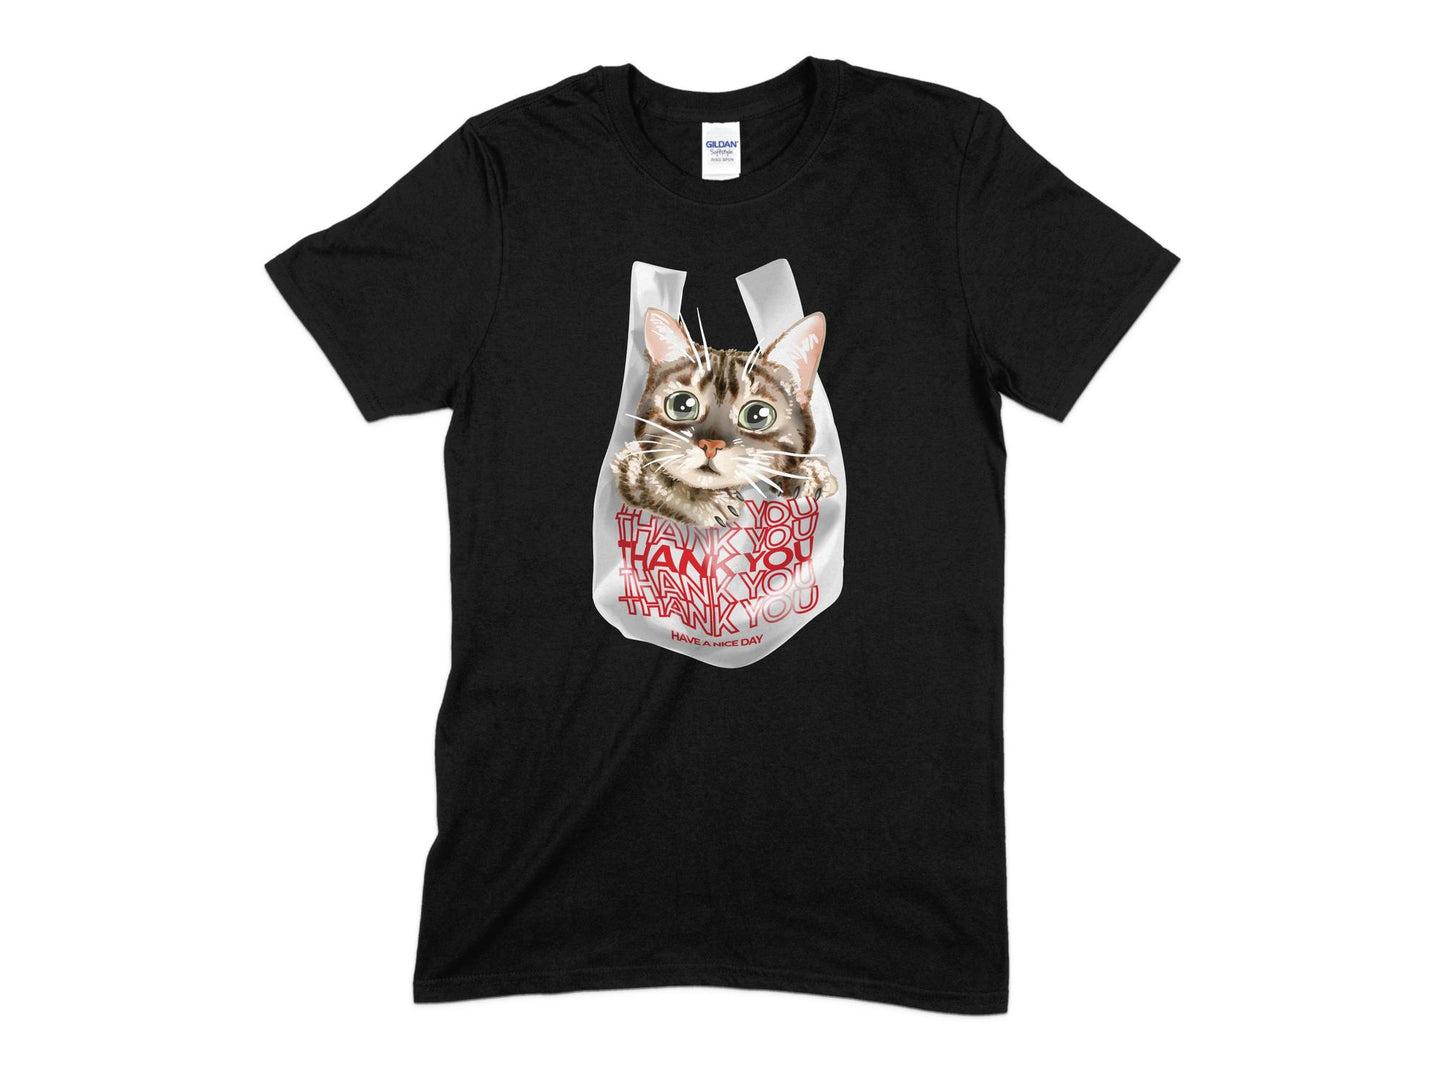 Thank You T-Shirt, Have A Nice Day T-Shirt, Cute Cat Shirt